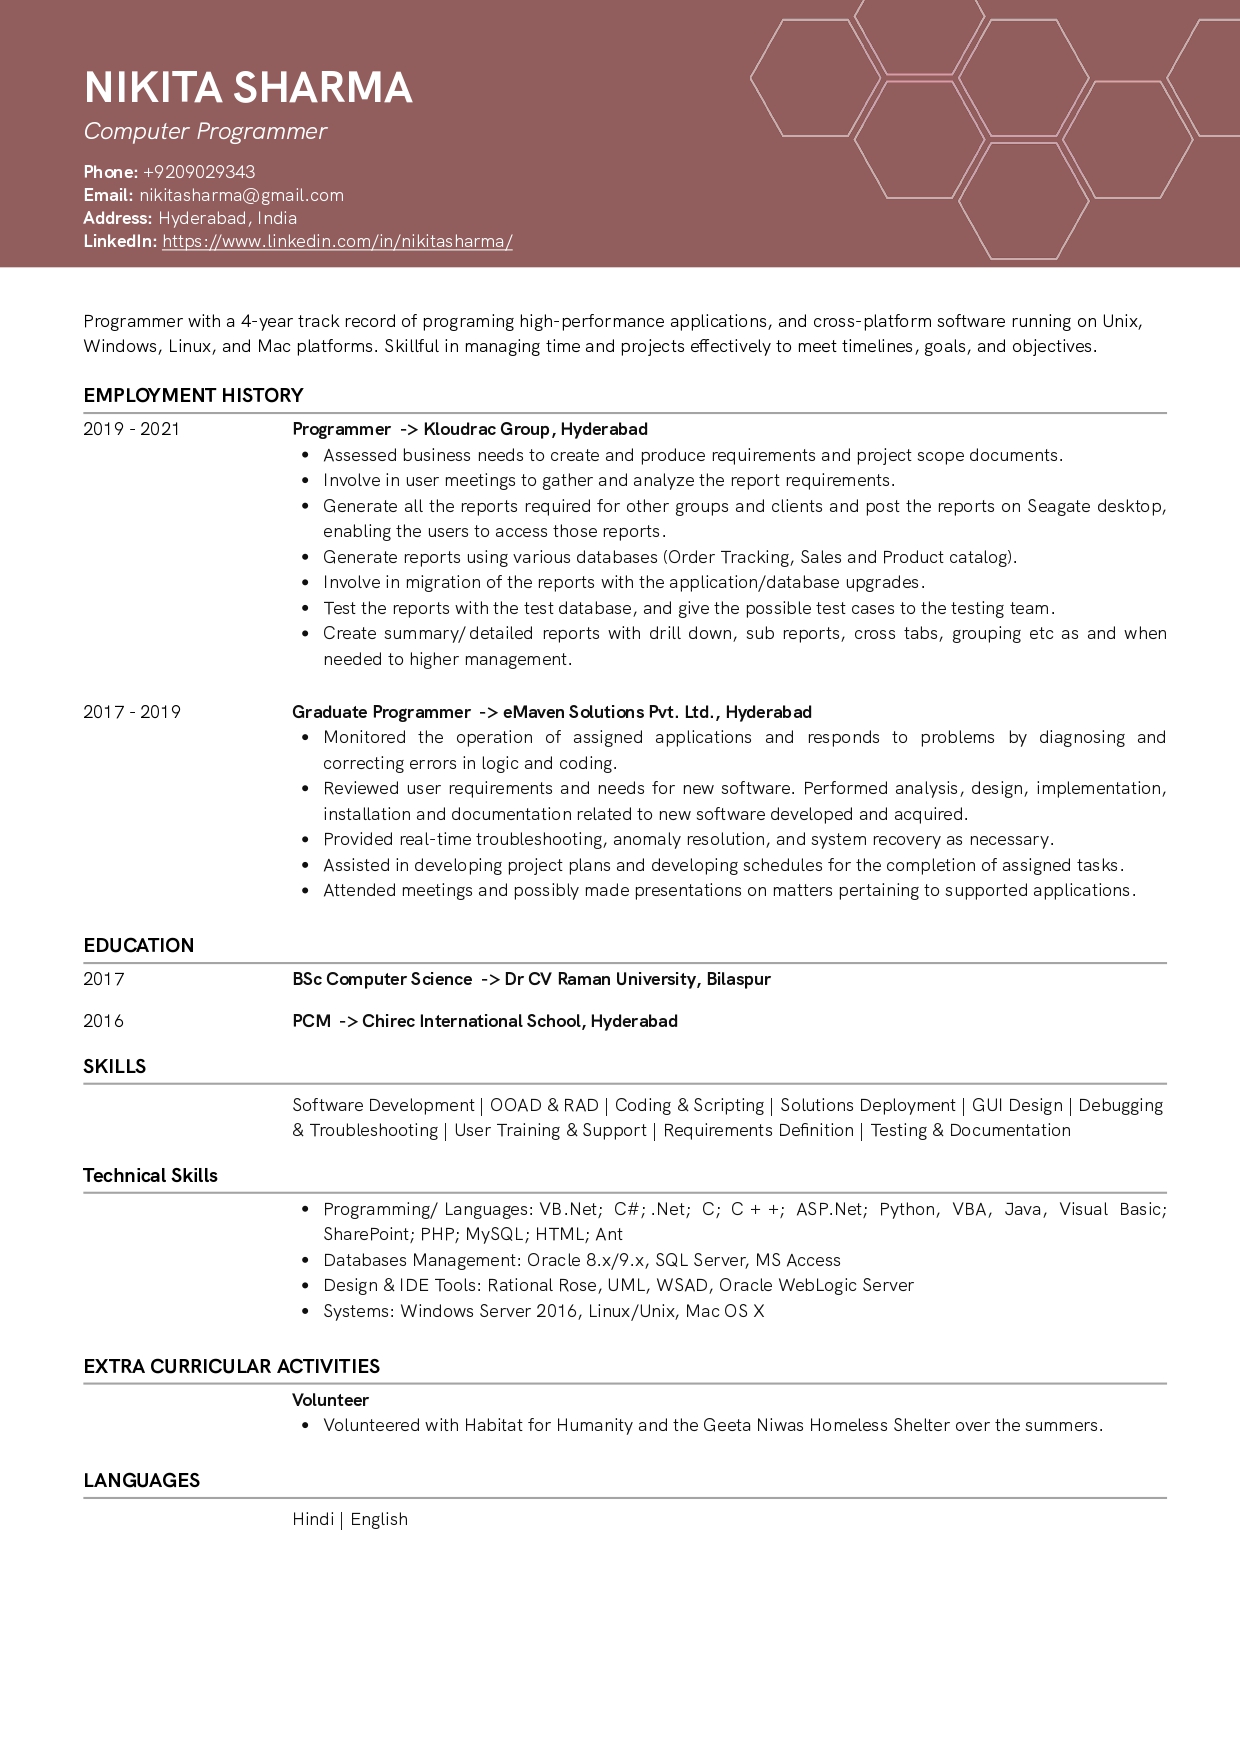 Resume of Computer Programmer